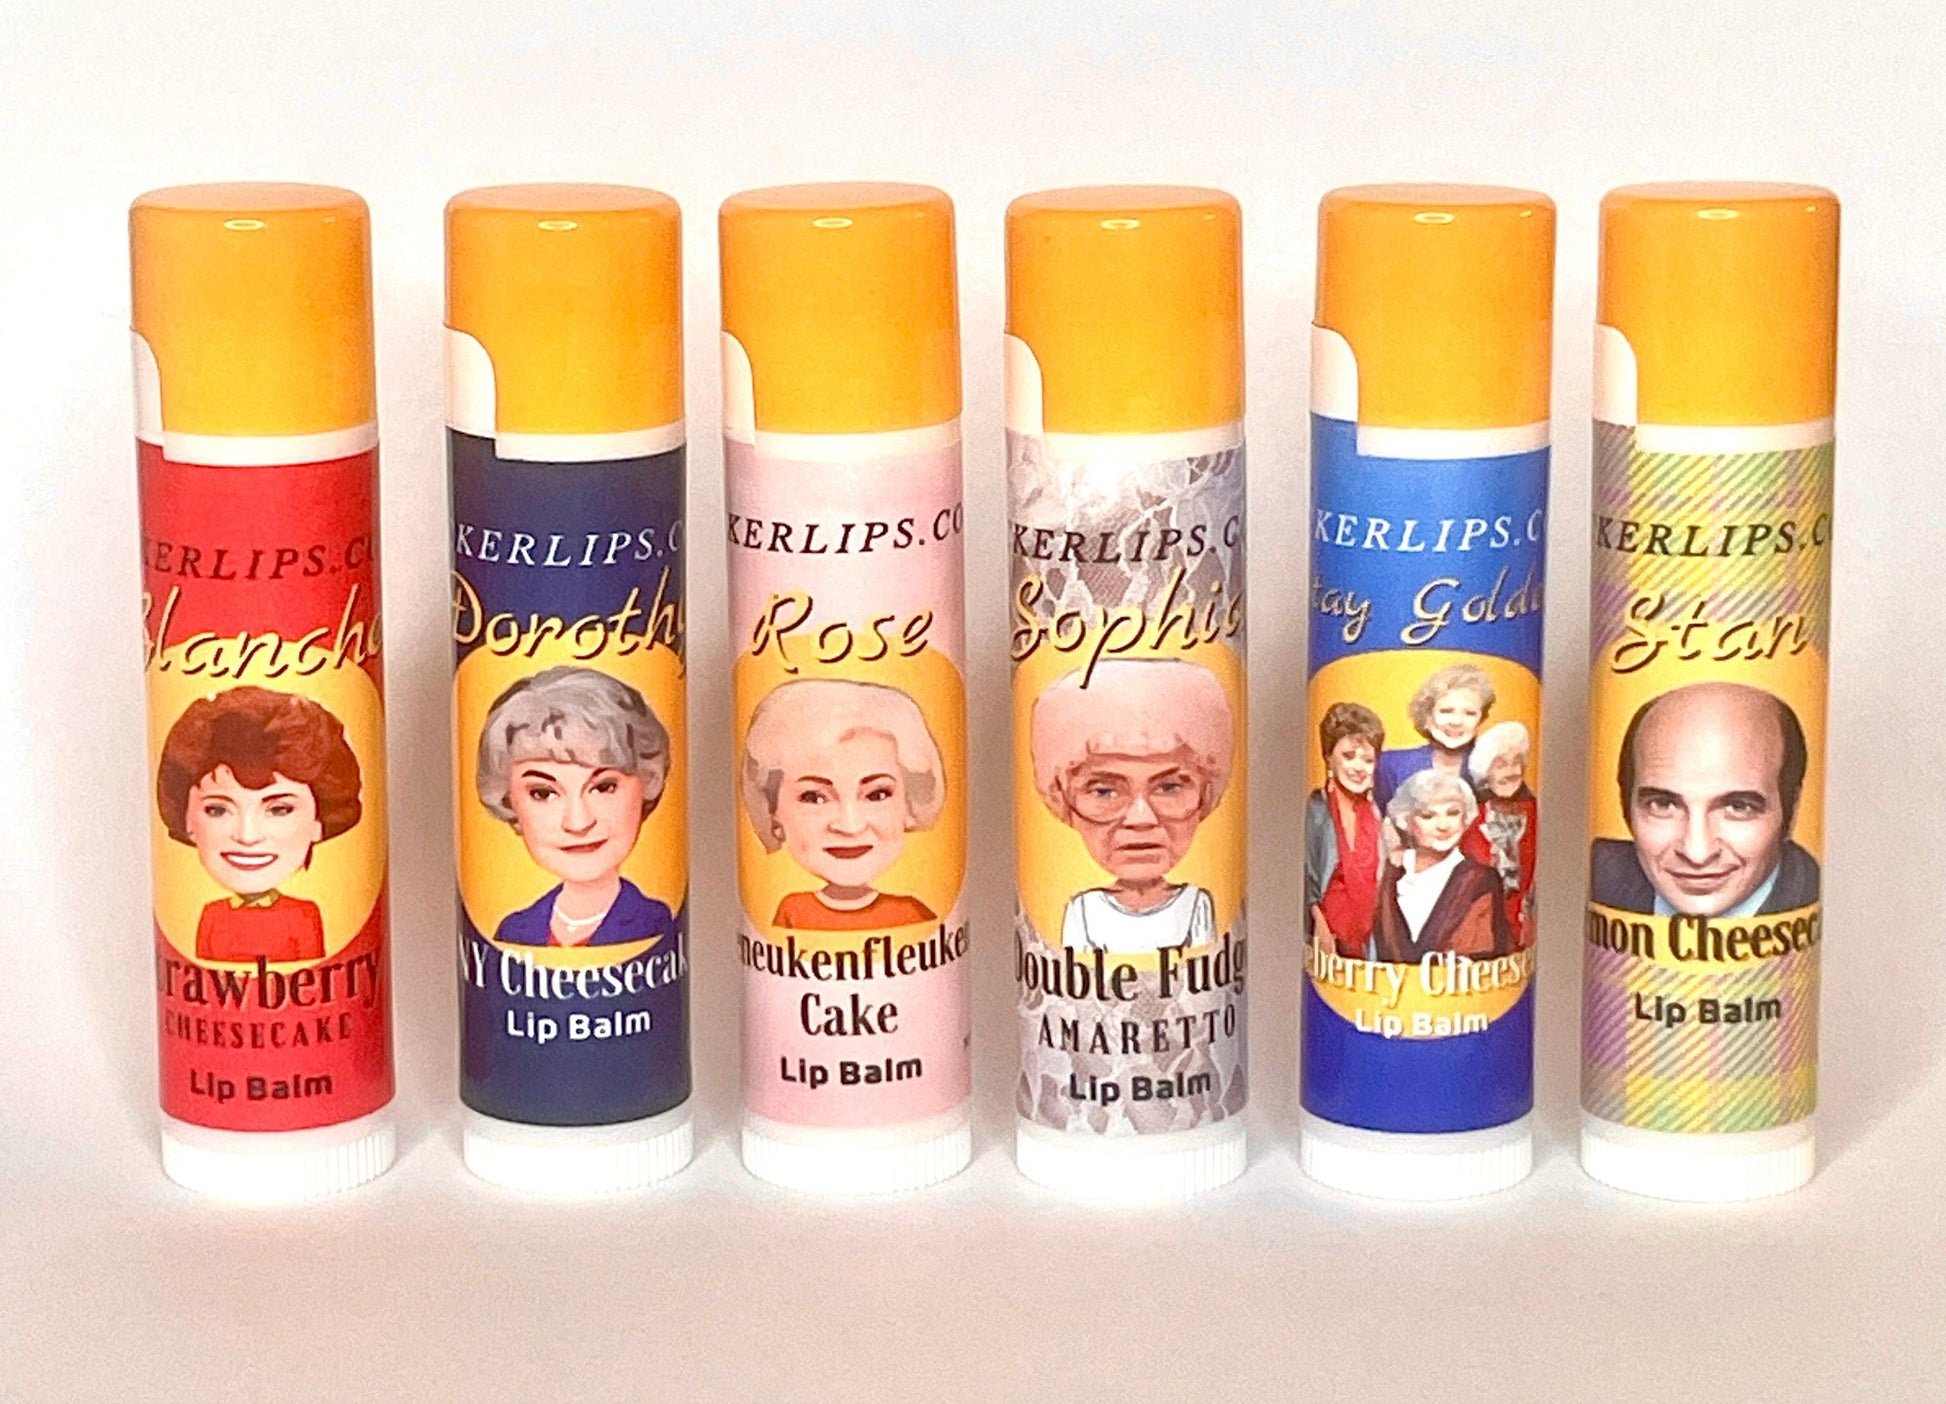 Golden Girls Lip Balm Six Pack - Cheesecake Flavors - 6 tubes - Lickerlips Lip Balms